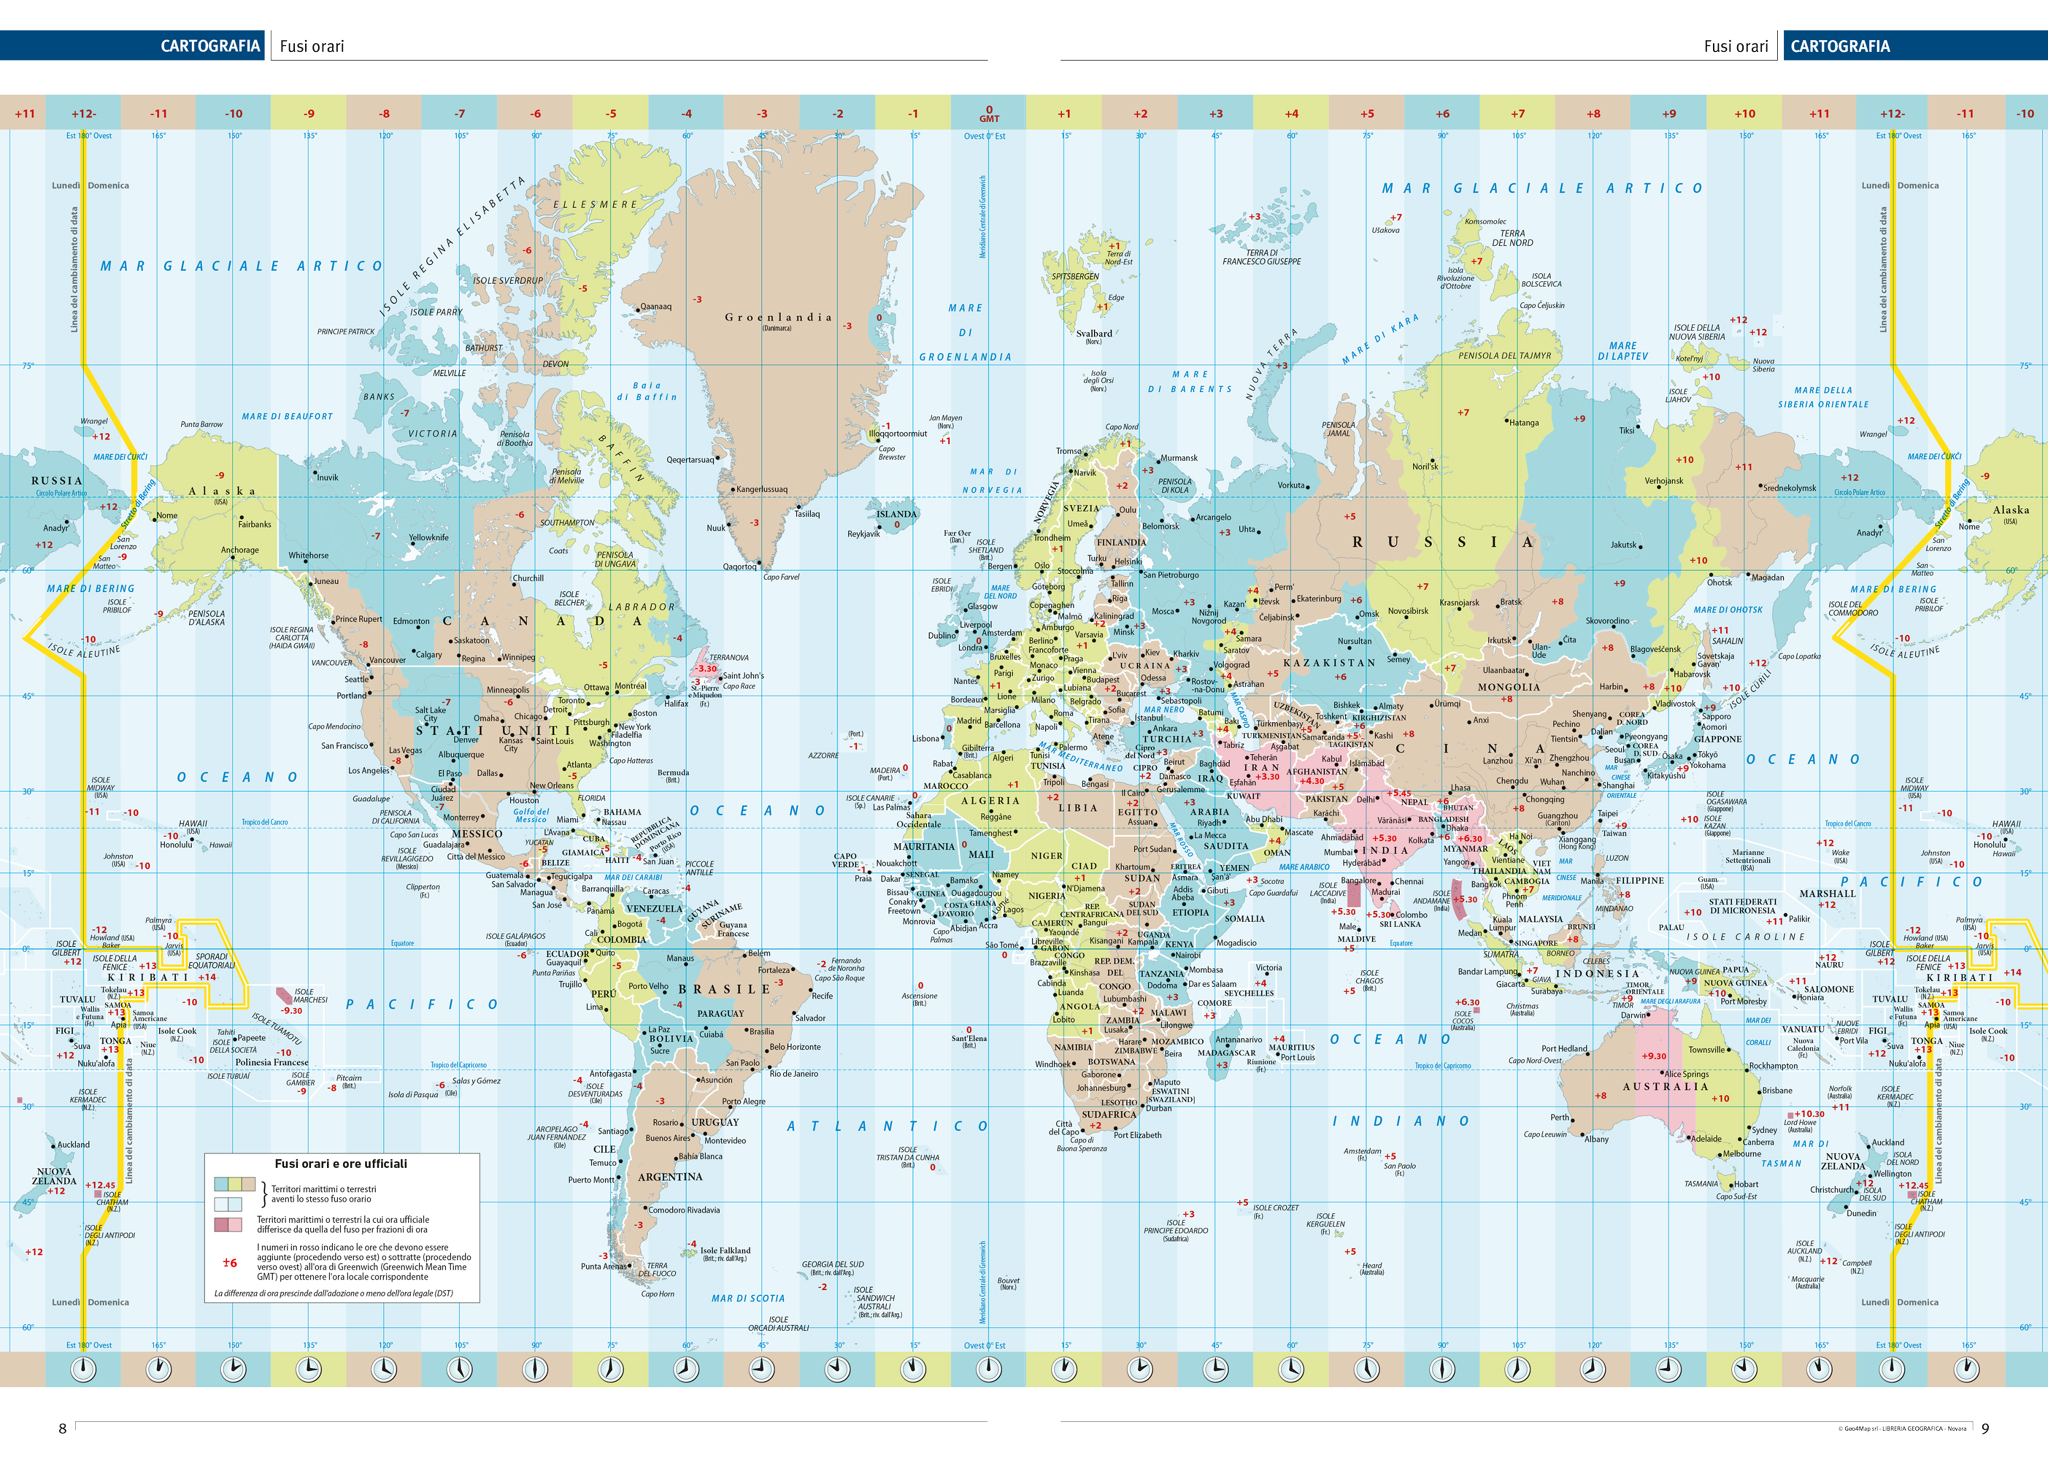 Atlante Geografico Metodico 2023-2024, Libri